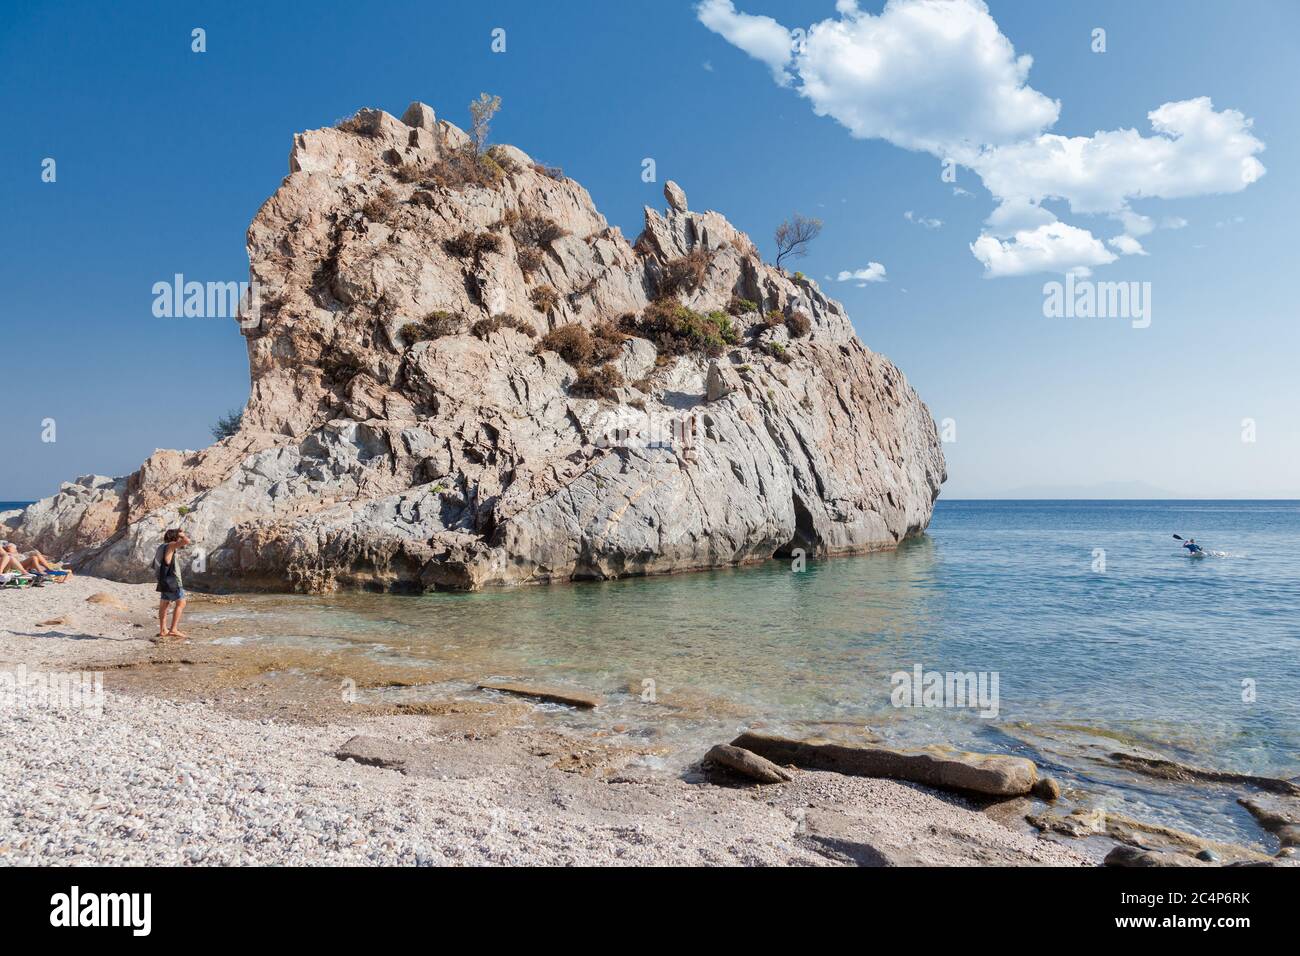 Melinta beach, in Plomari region, Lesvos (or Lesbos) island, Greece. Stock Photo